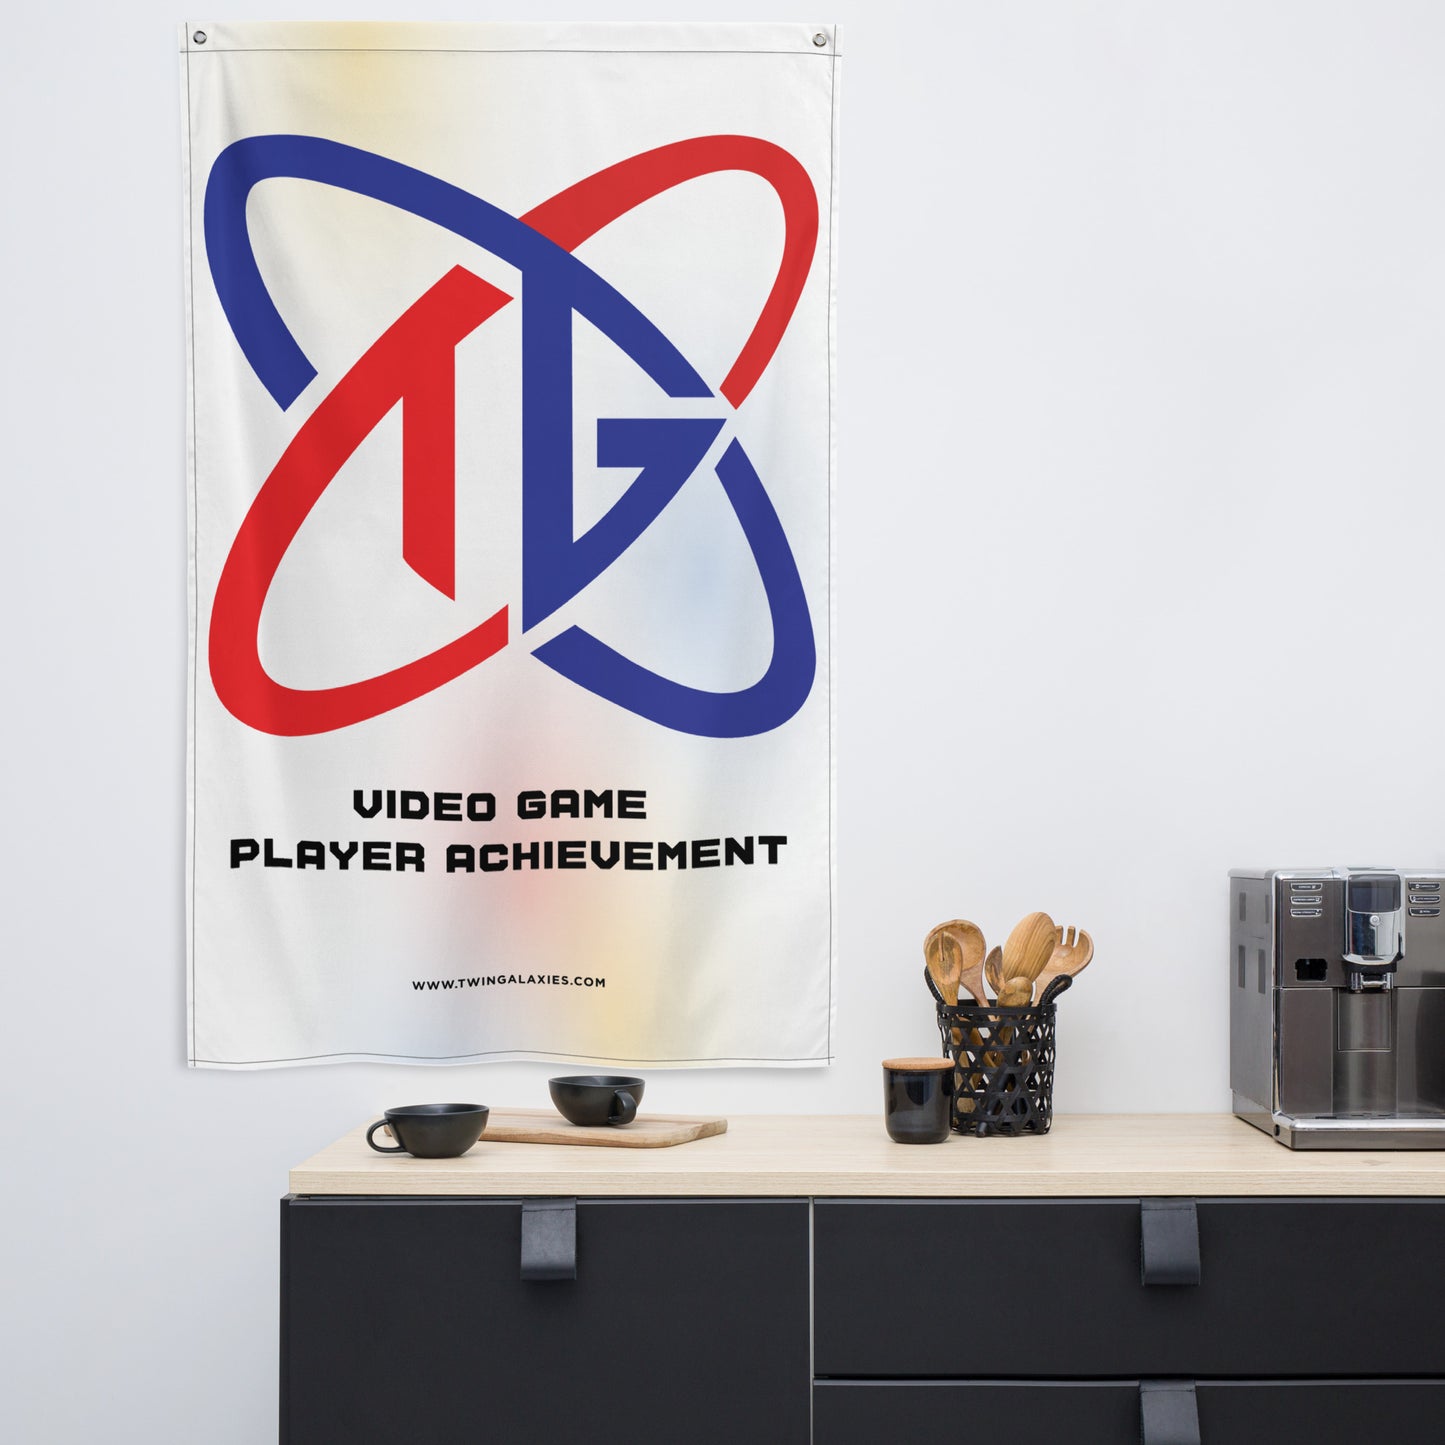 TG Player Achievement Flag - BRIGHT